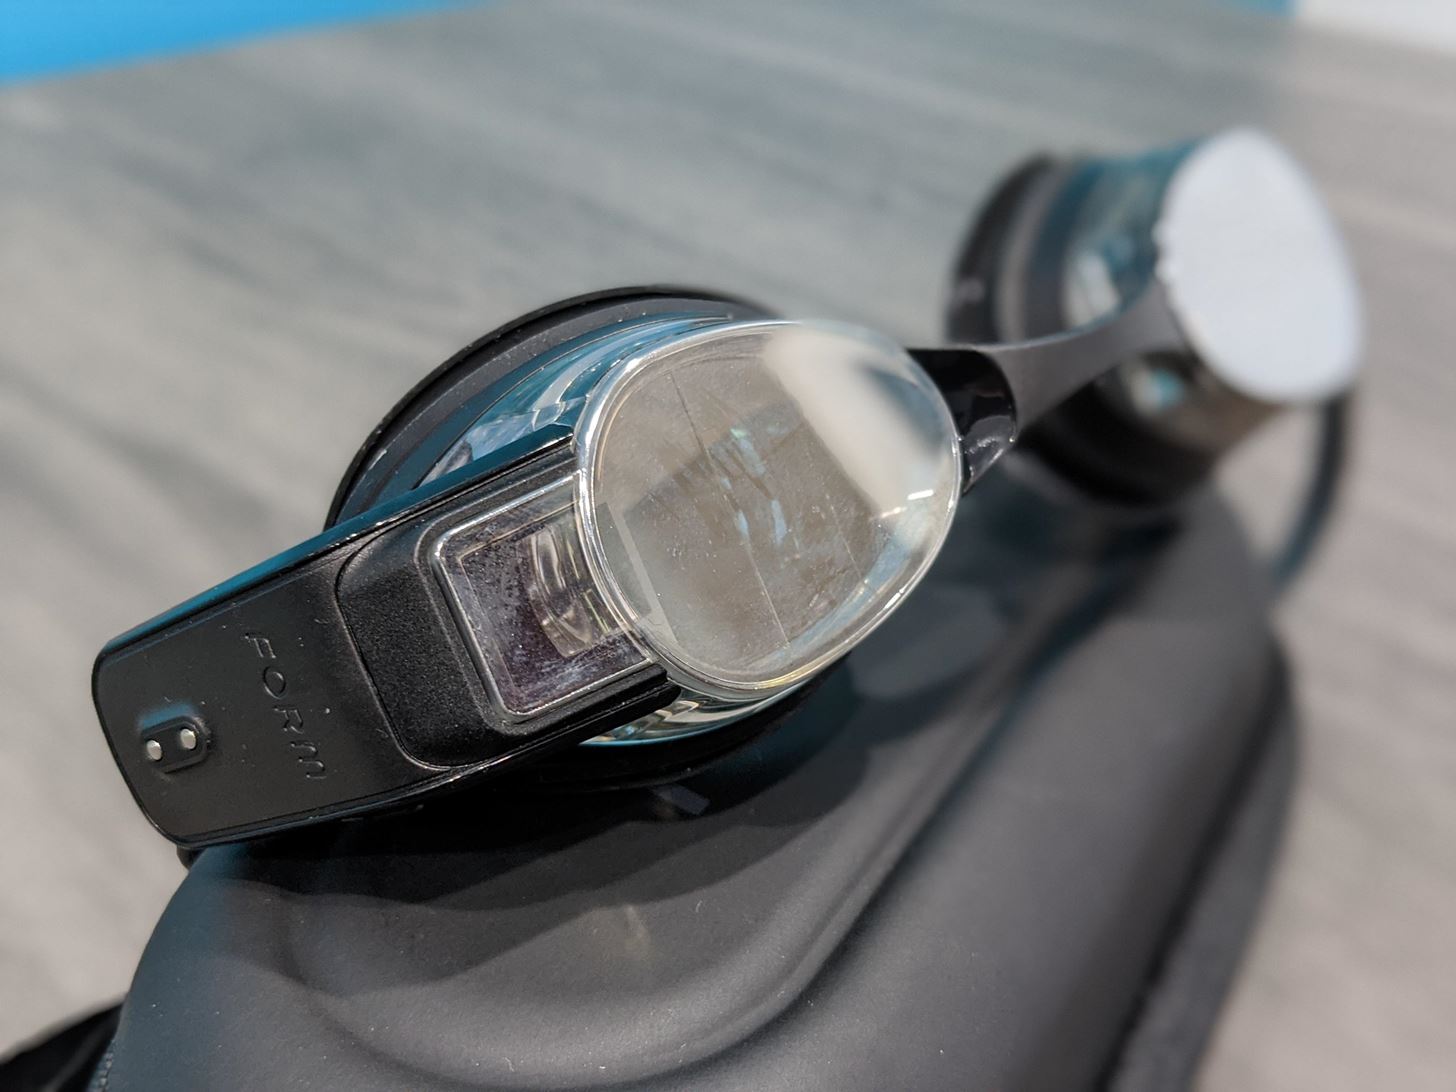 Hands-On: Form Smart Swim Goggles Hit the Mark for Aquatics Athletes